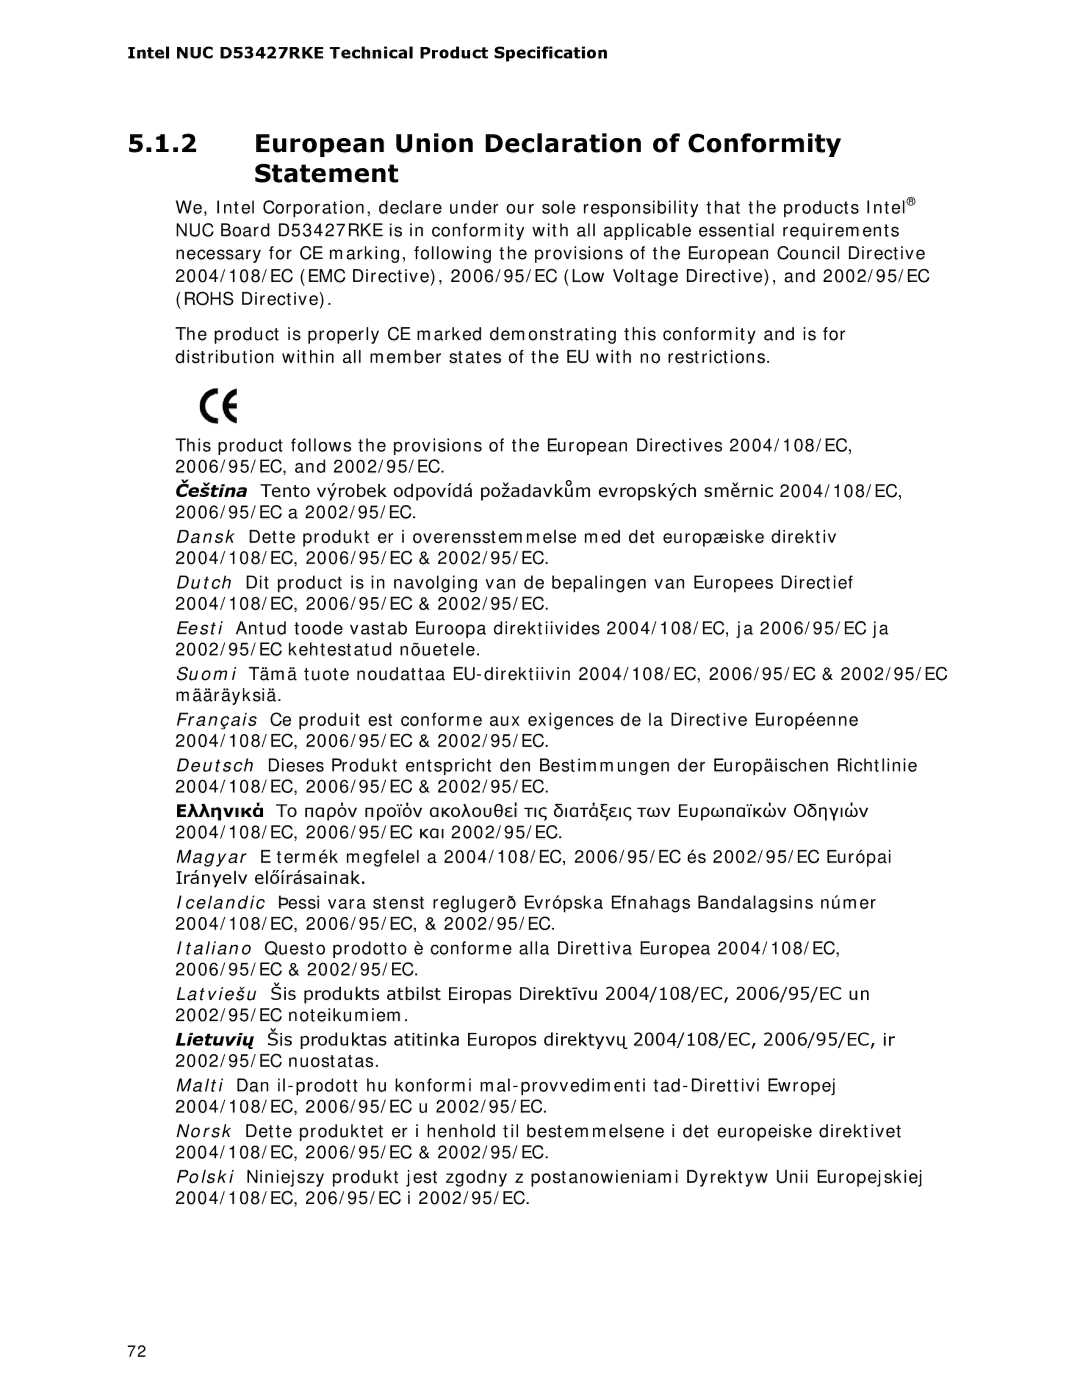 Intel BOXDC53427HYE specifications European Union Declaration of Conformity Statement 